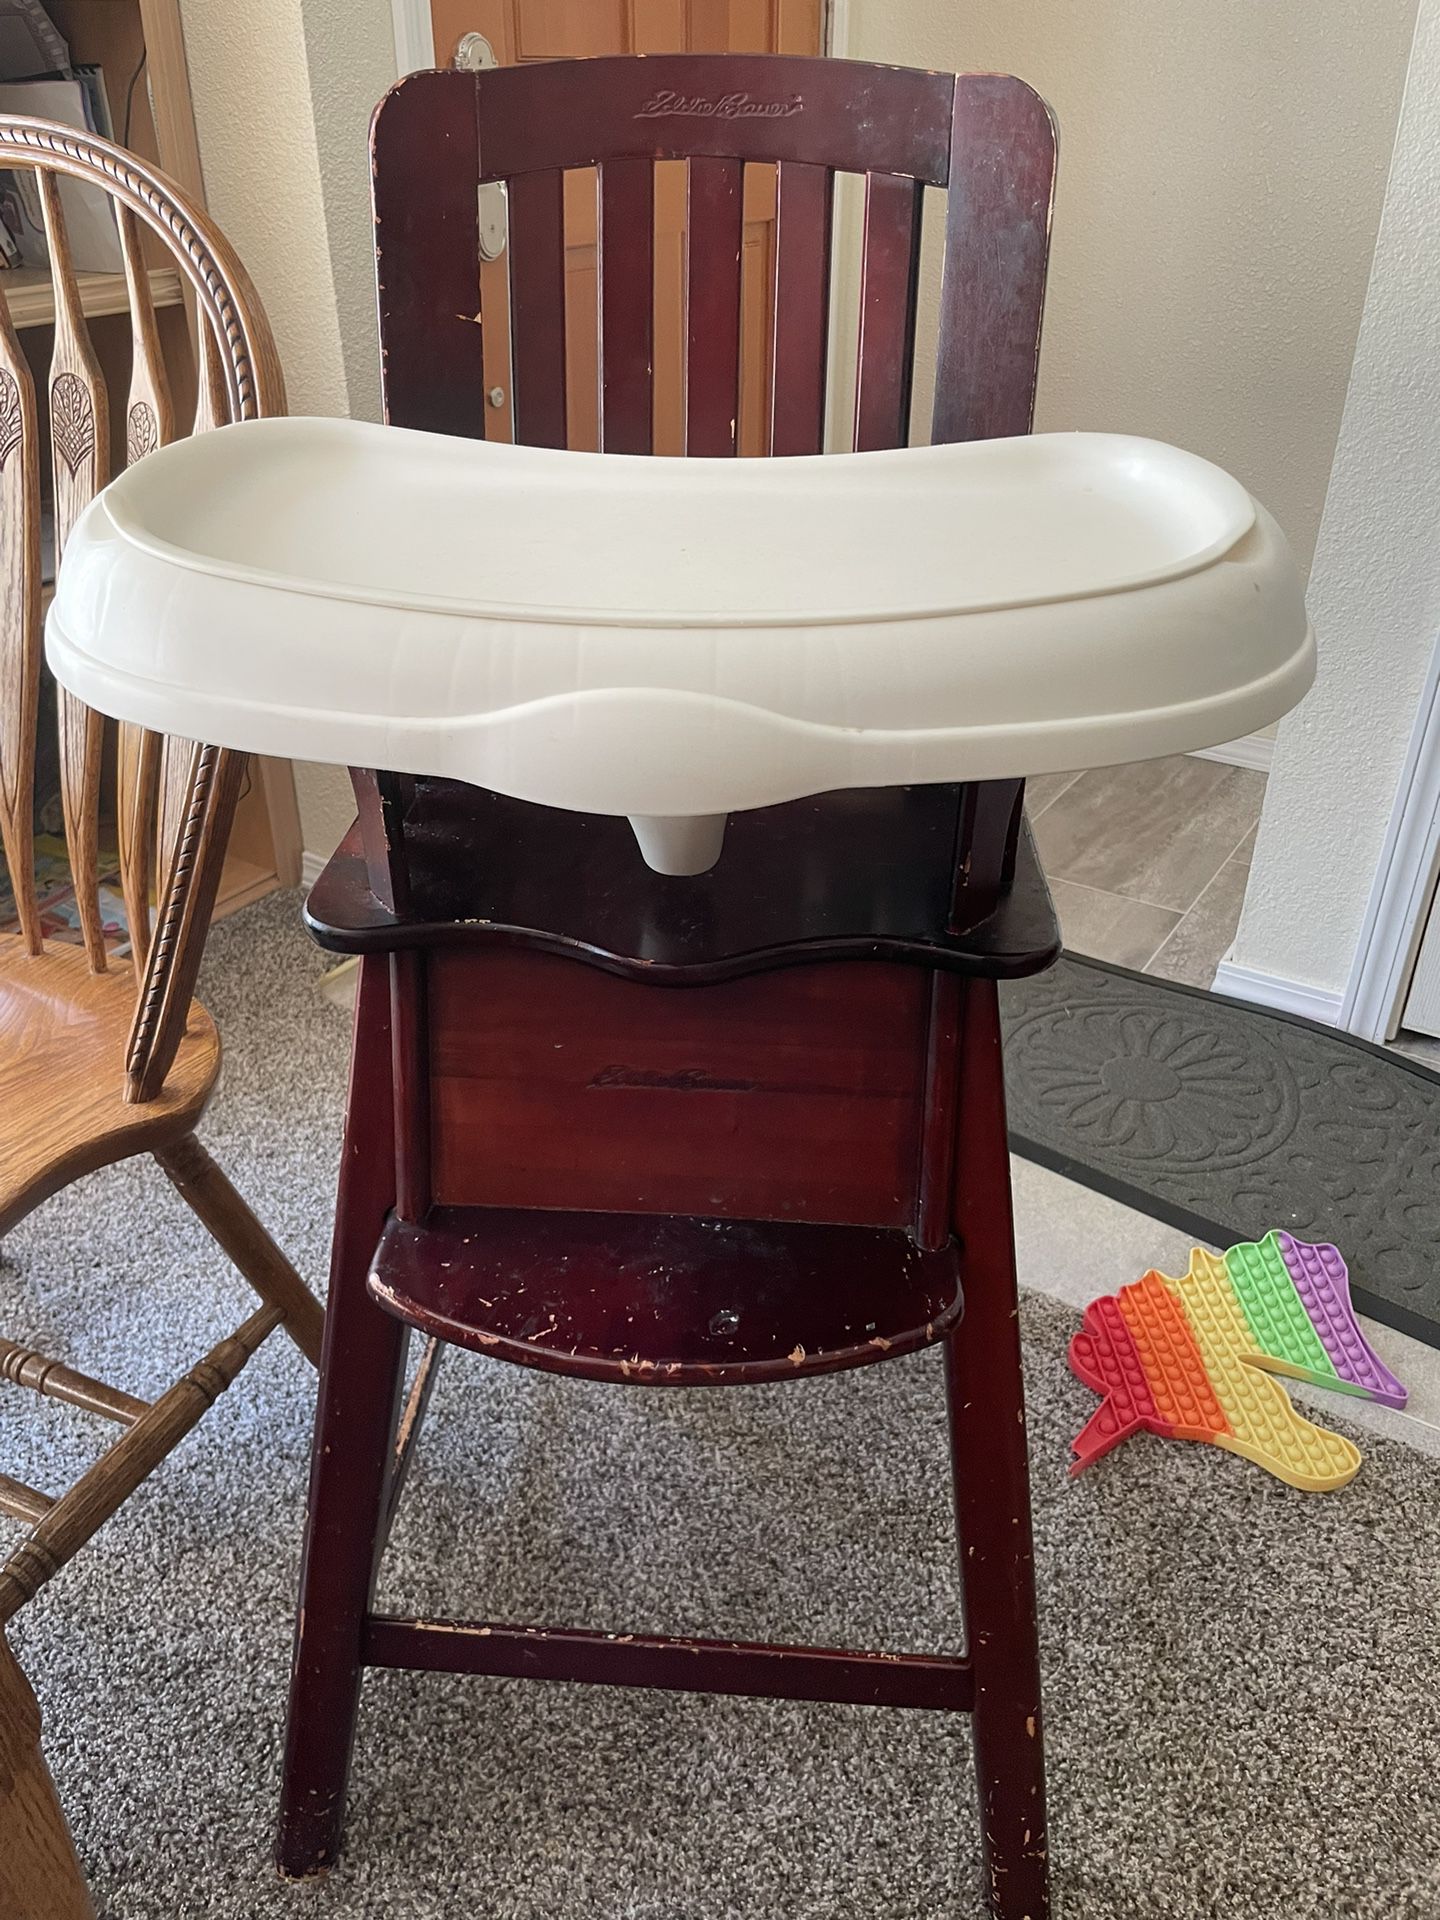 Baby High Chair $30